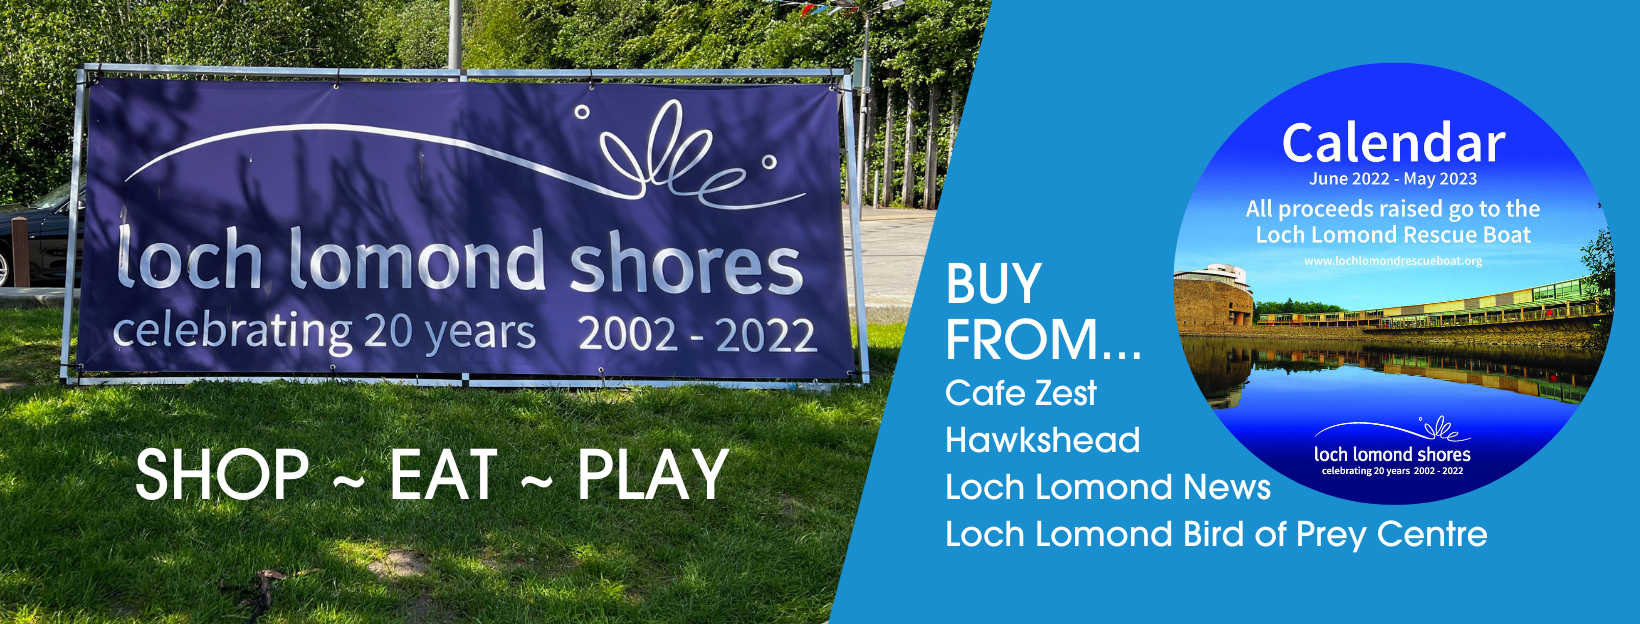 Loch Lomond Shores 20th Anniversary Calendar